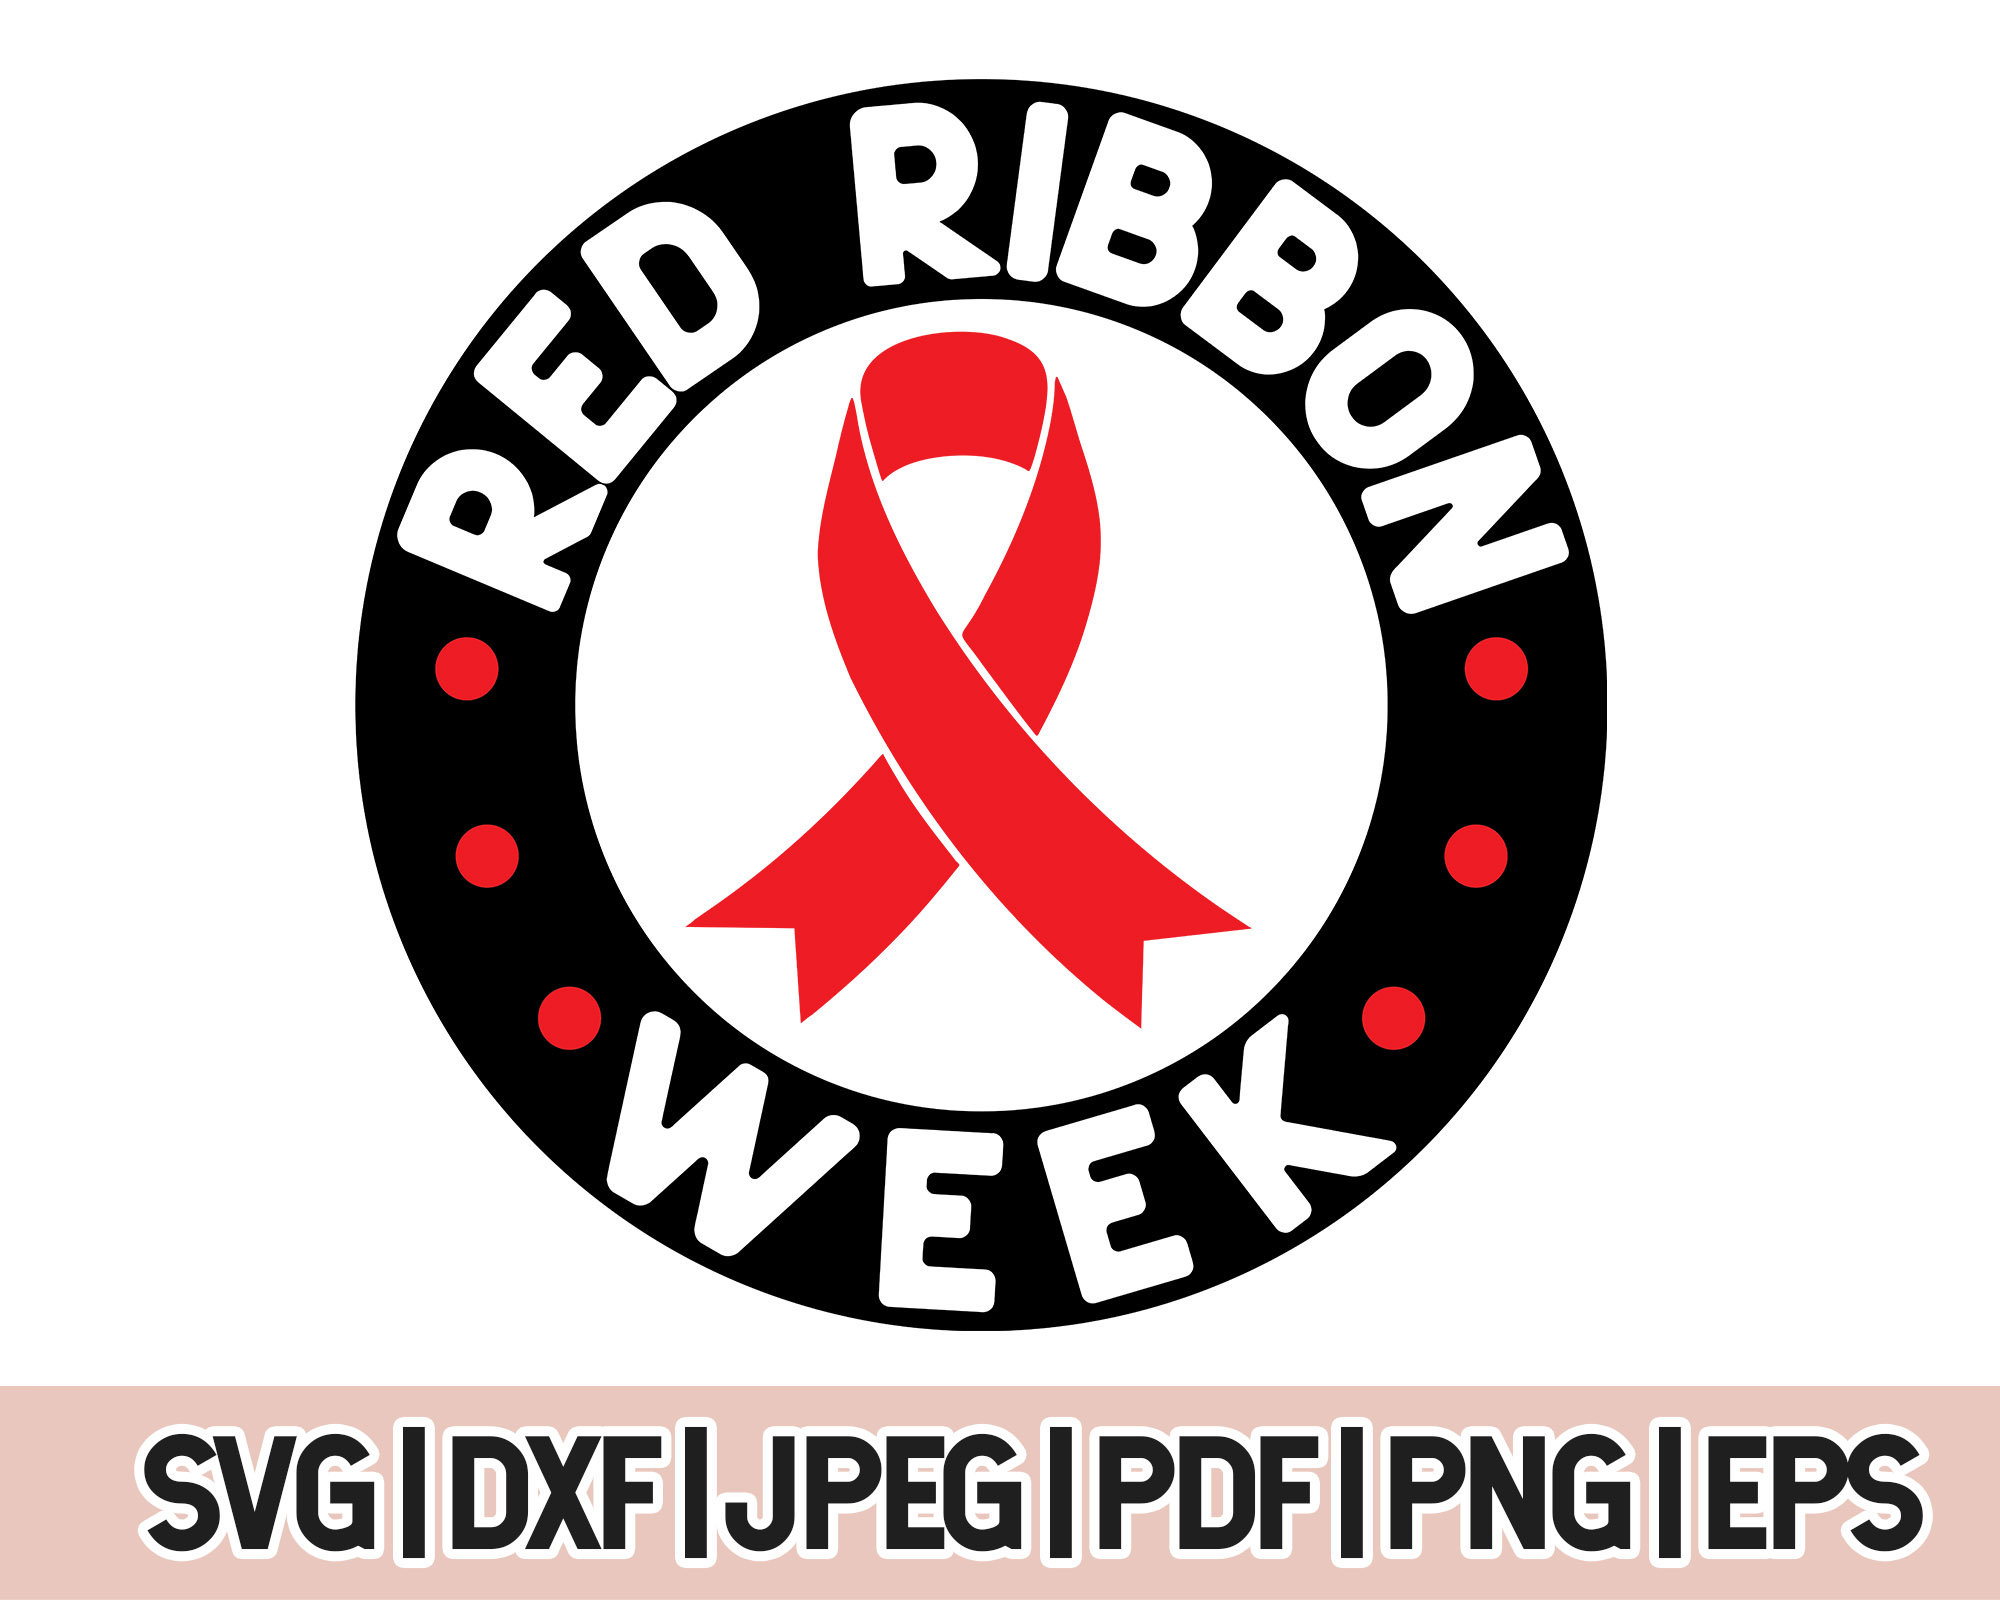 File:Red Ribbon.svg - Wikipedia